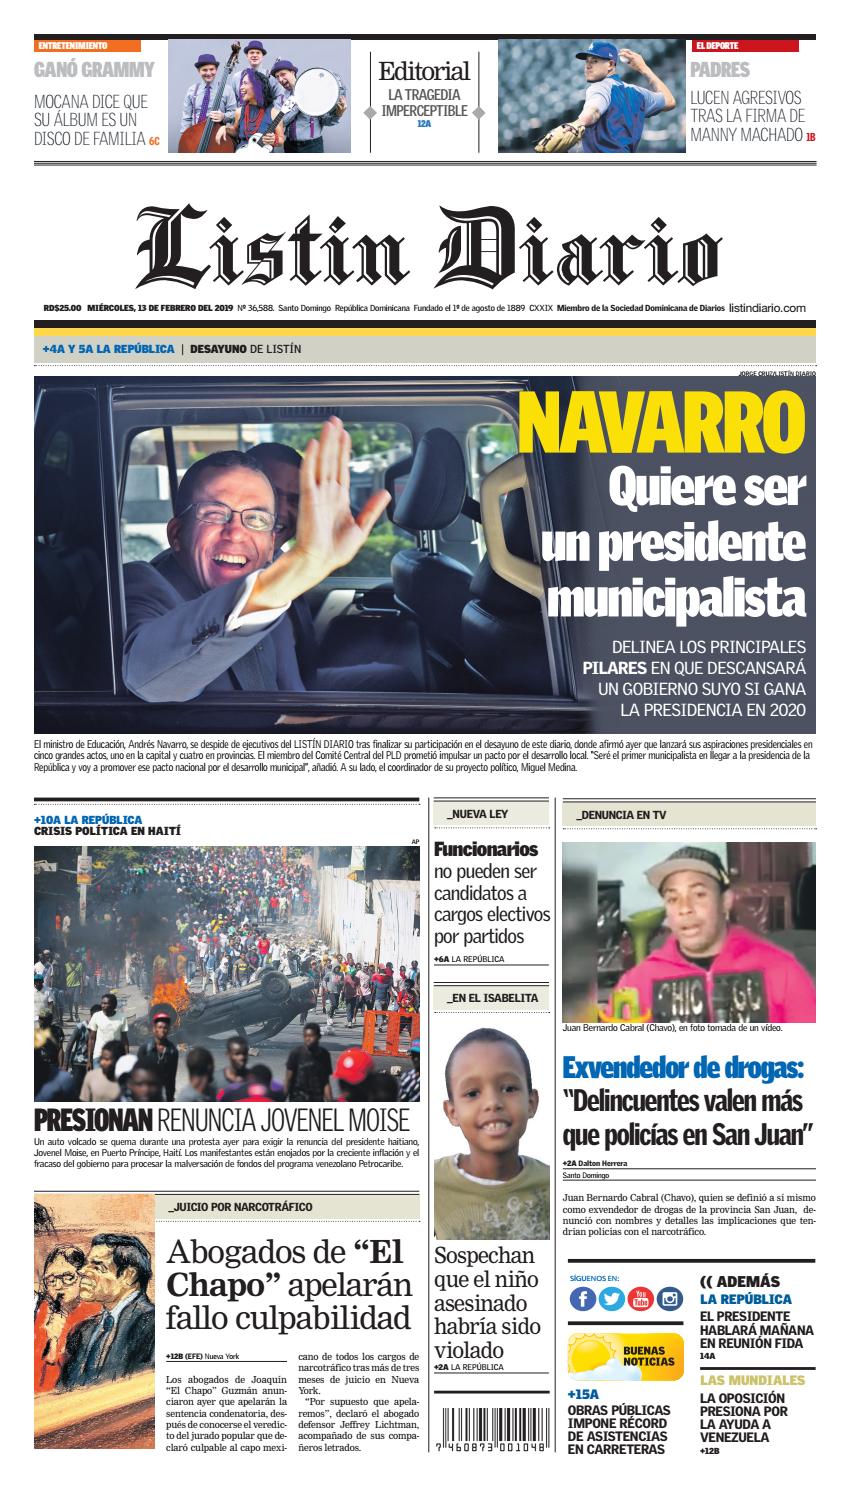 Portada Periódico Listín Diario, Jueves 14 de Febrero 2019